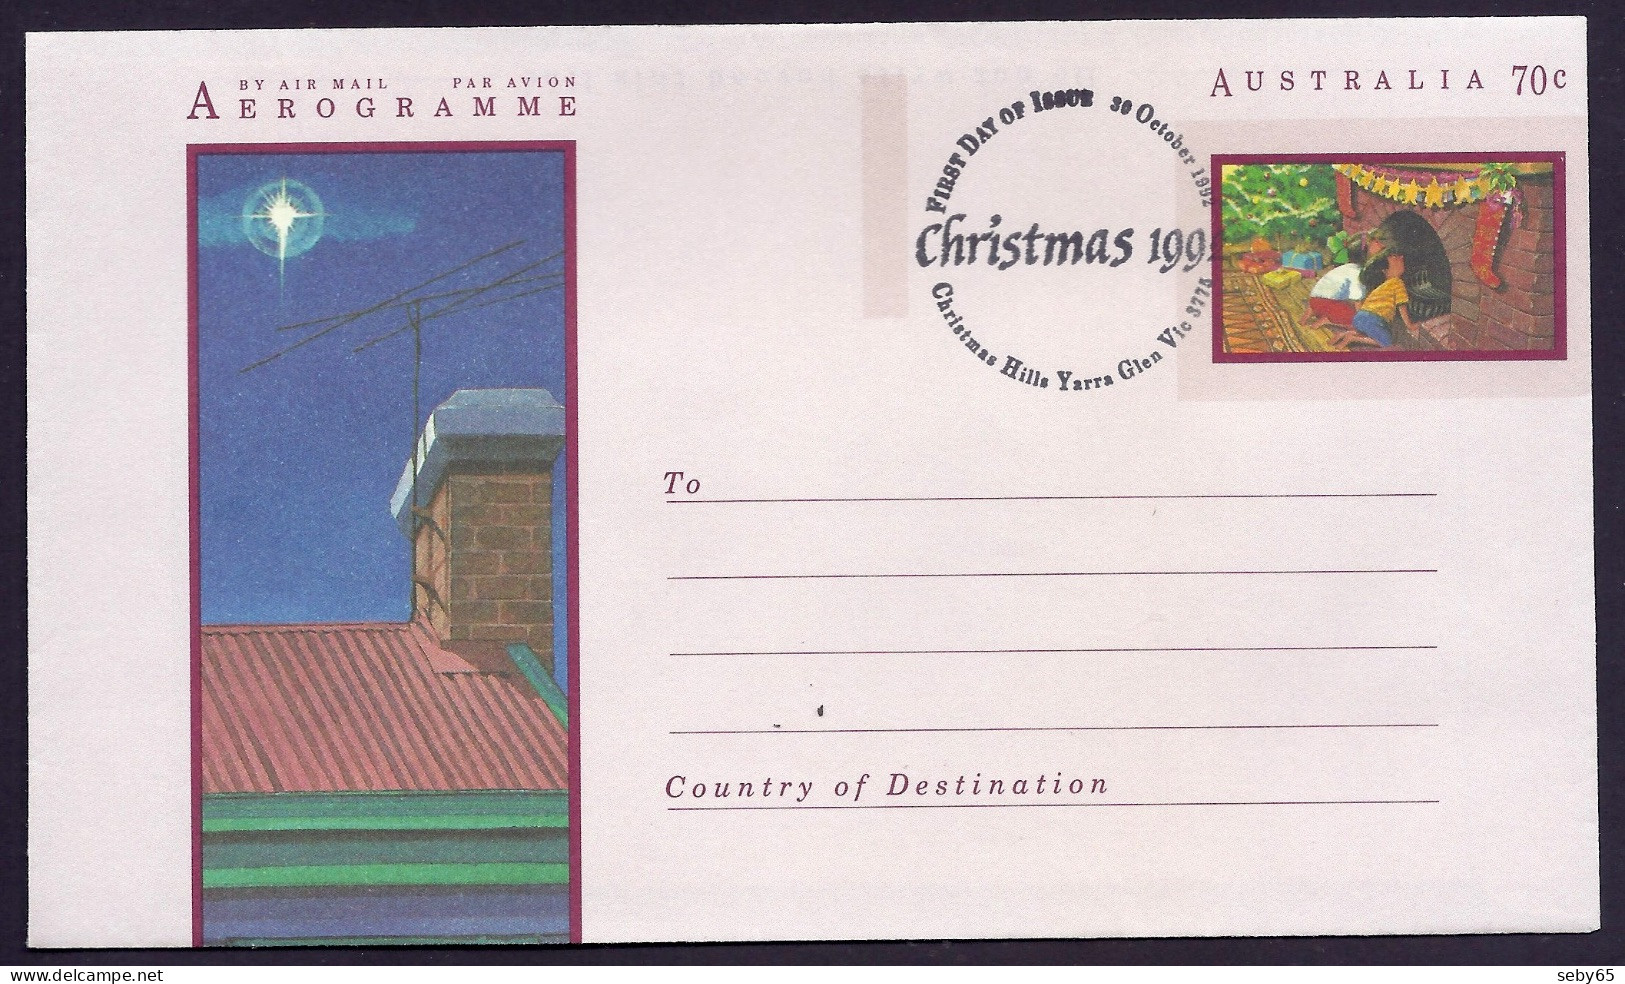 Australia 1992 Aerogramme - Christmas, Noel, Natale, Nativity, 70c - FDC Postmark - Aerogrammi